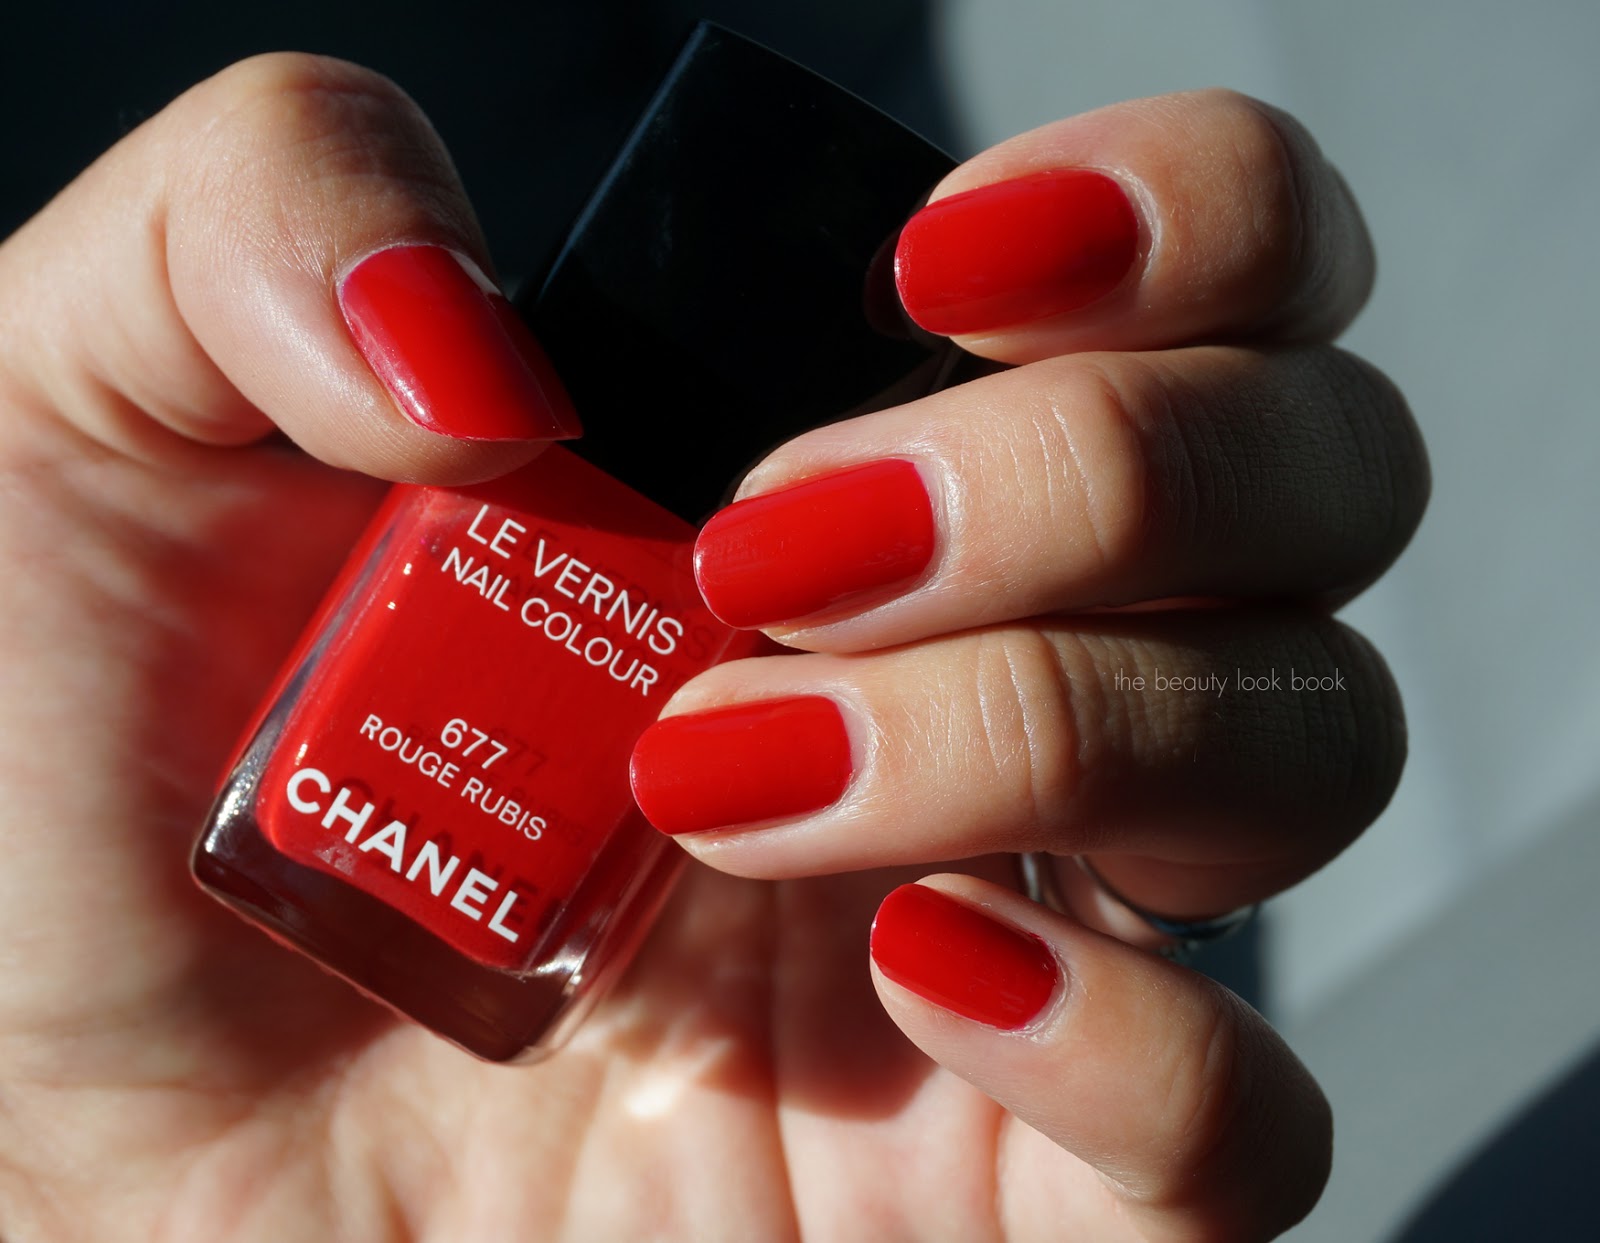 Chanel Le Vernis Longwear Nail Colour in "Rouge Essentiel" 2024 - wide 4